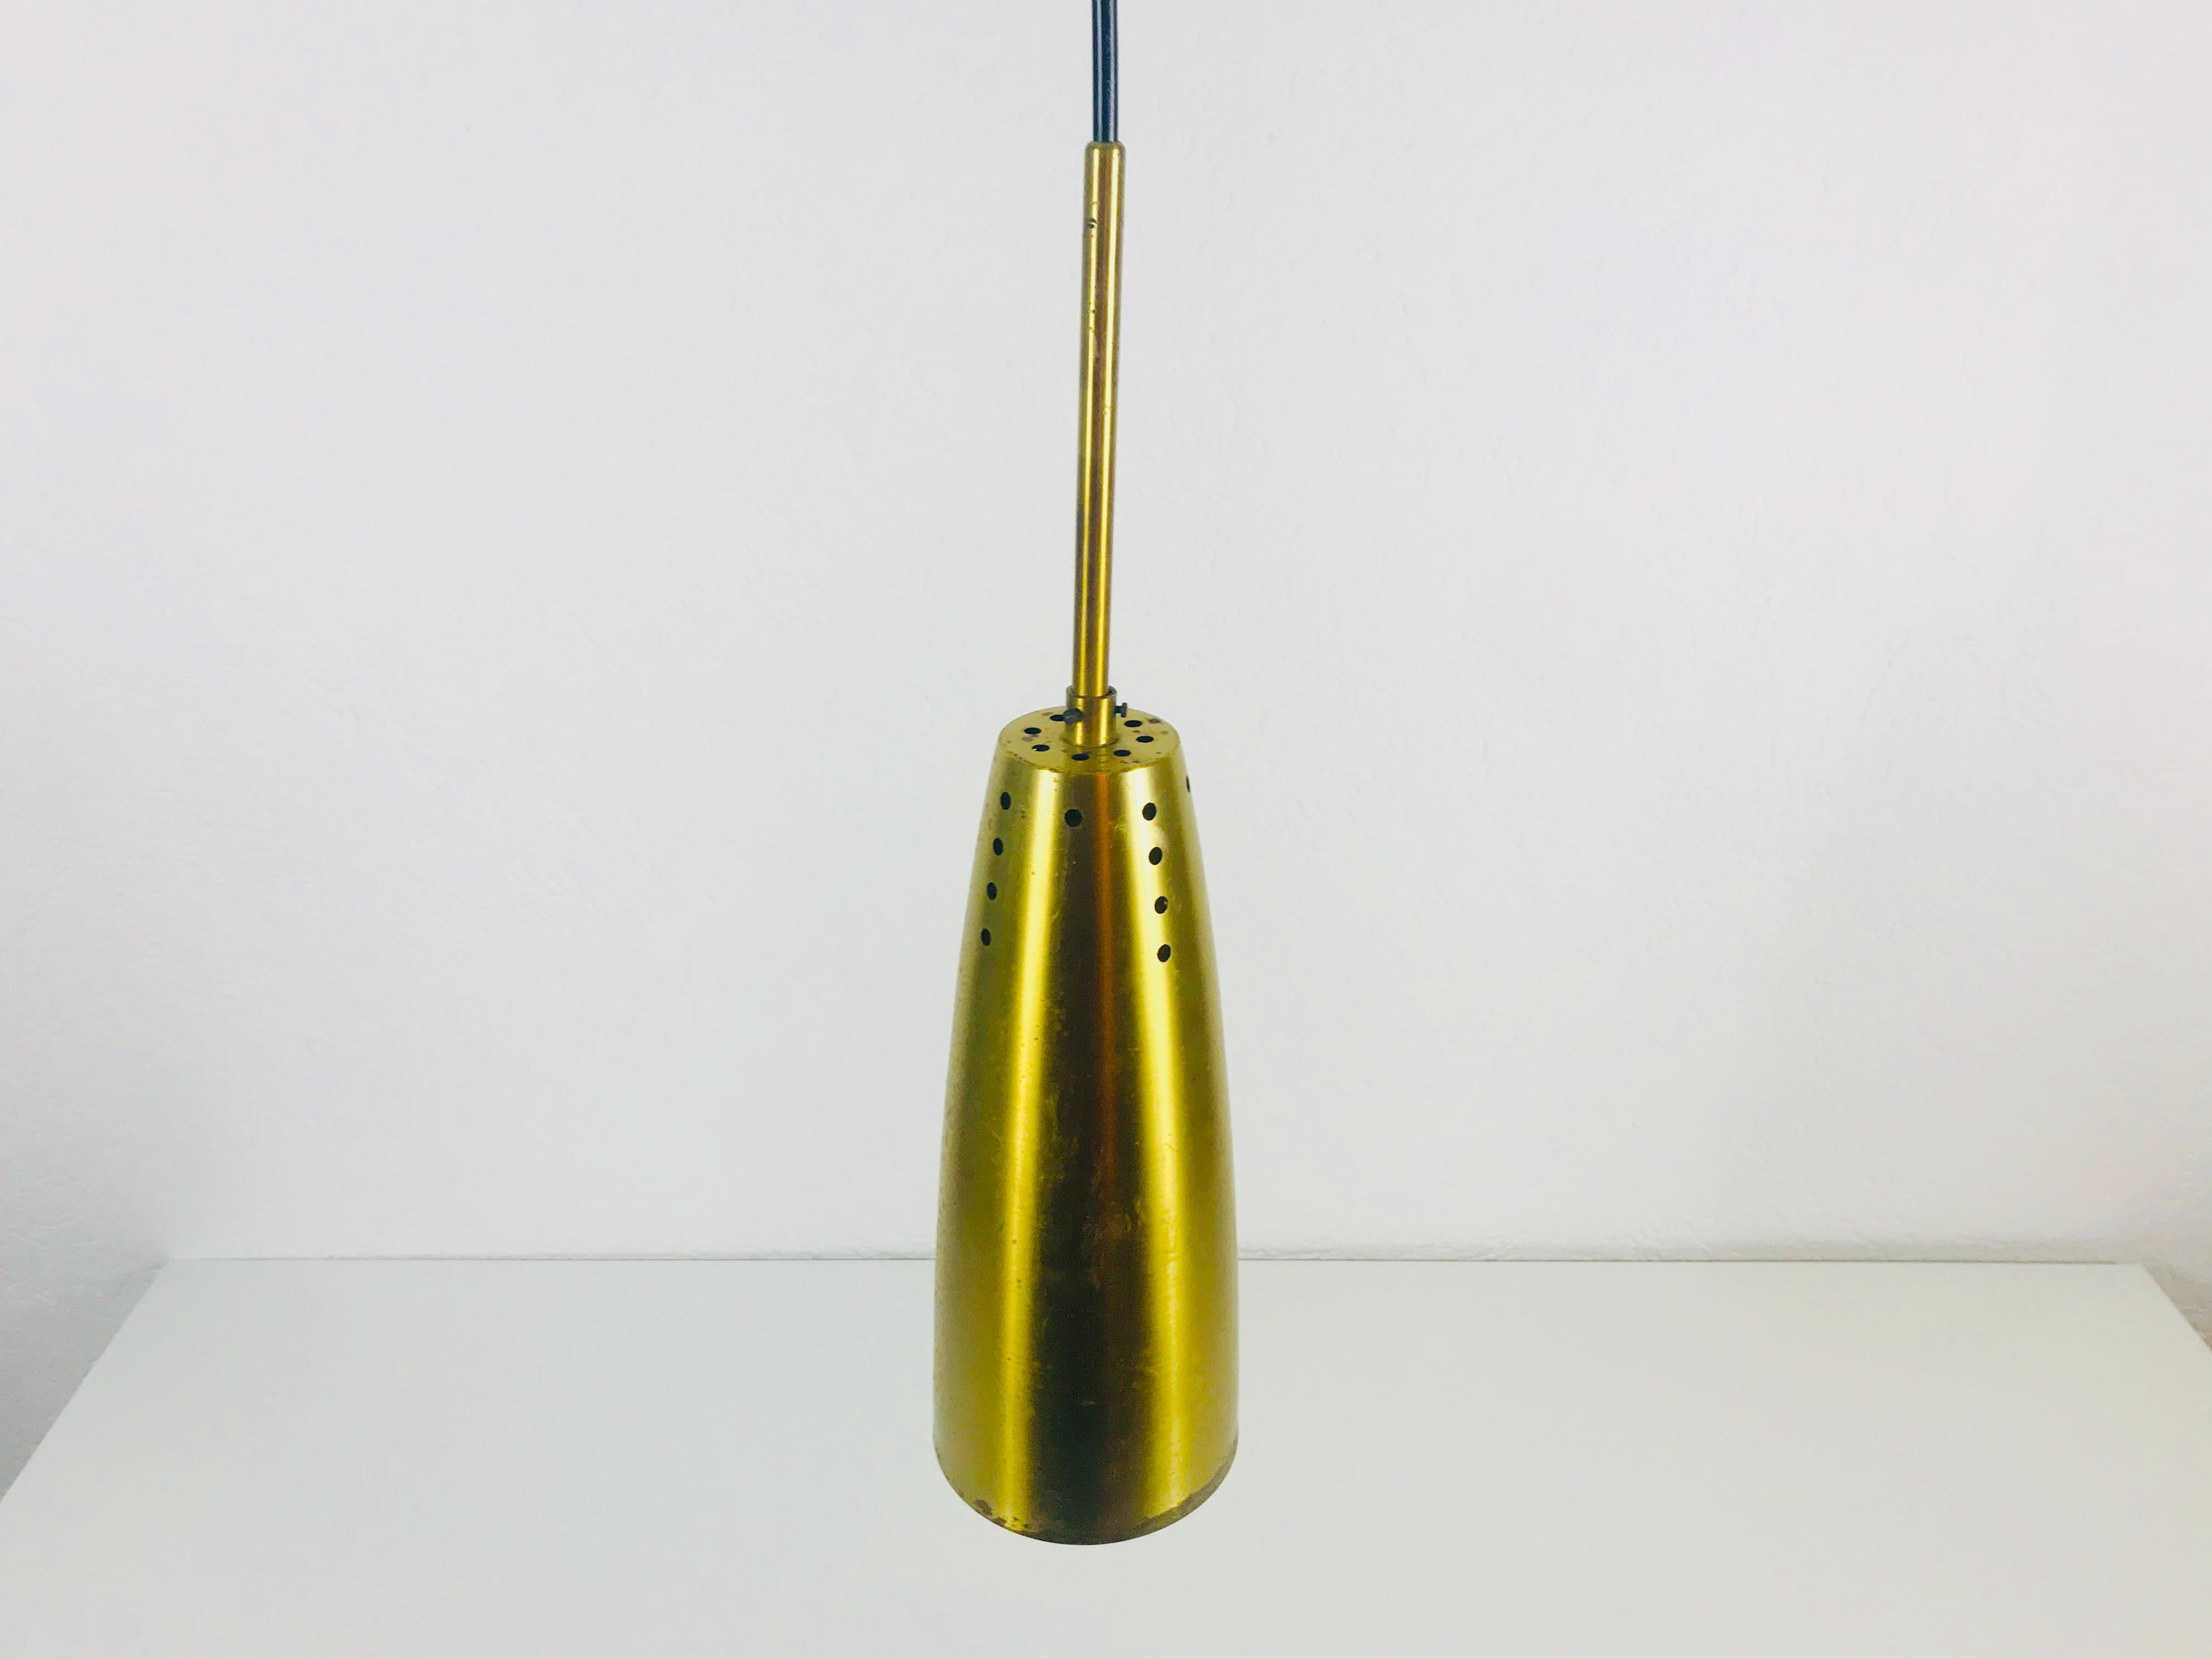 Set of 3 Full Brass Mid-Century Modern Pendant Lamps, 1950s, Germany For Sale 2